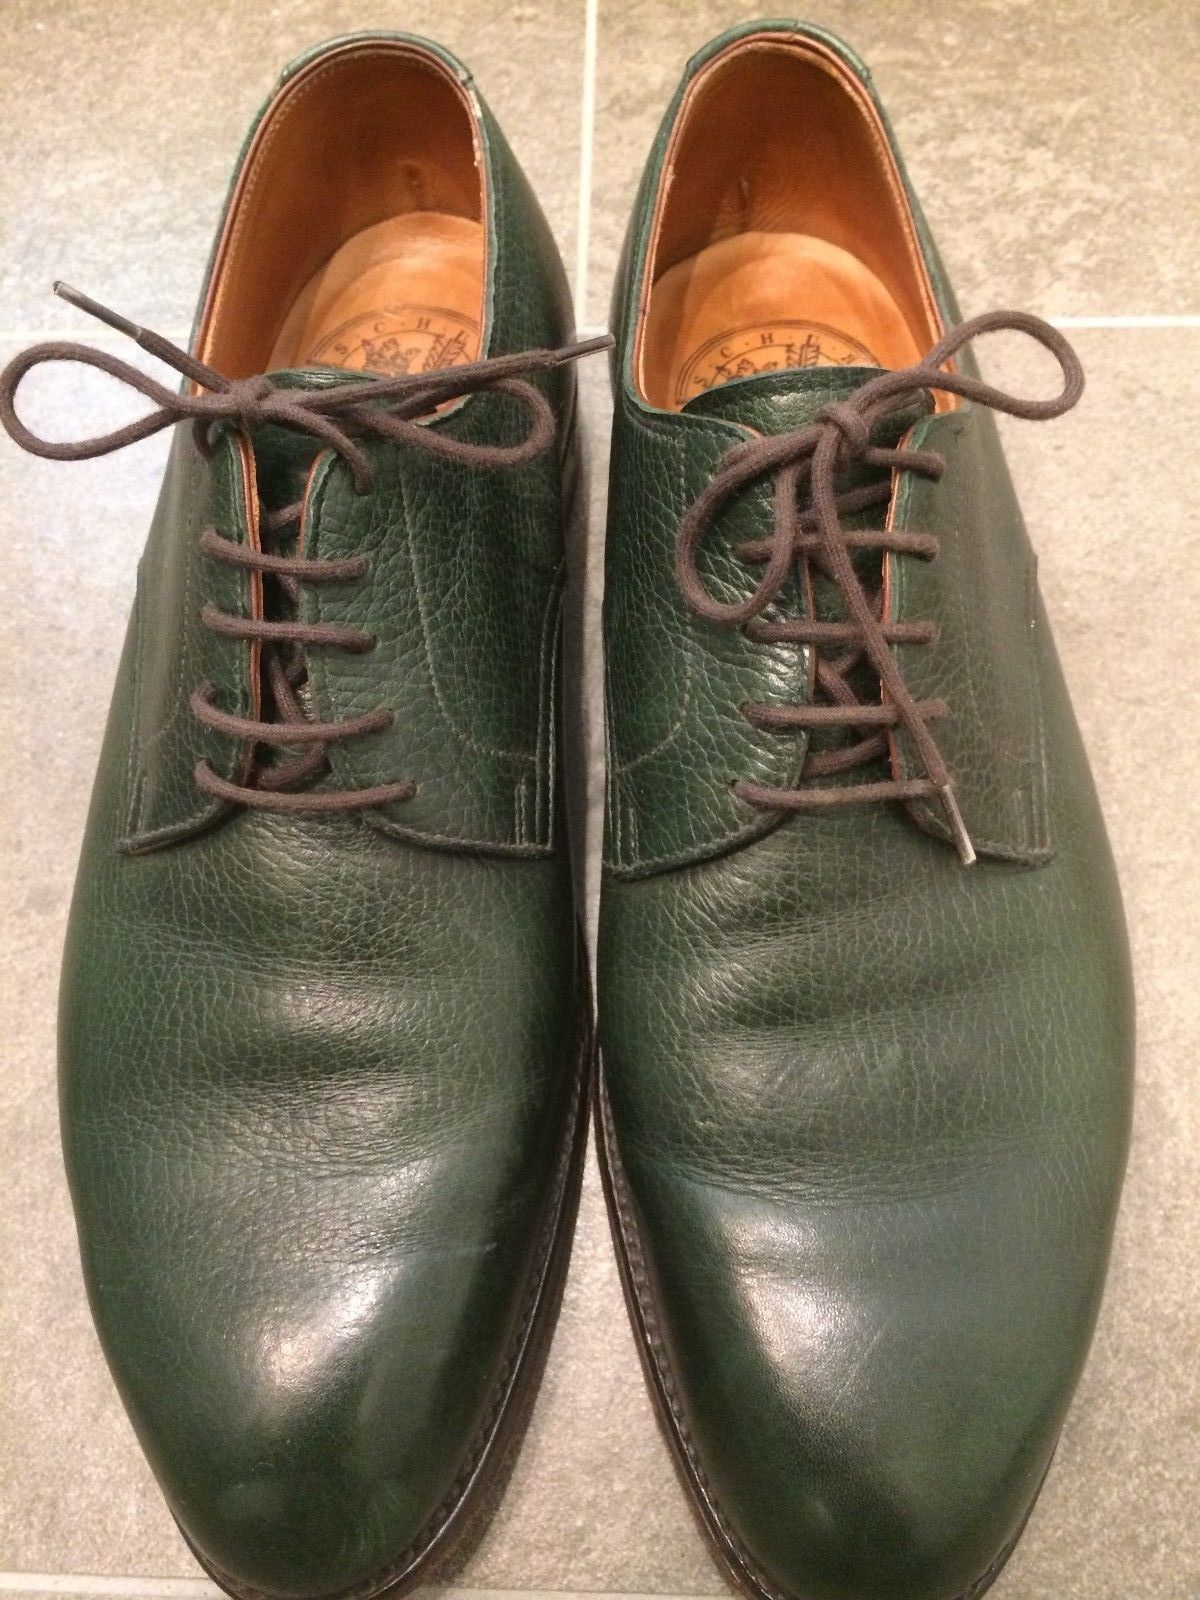 silvae: grüne Schuhe